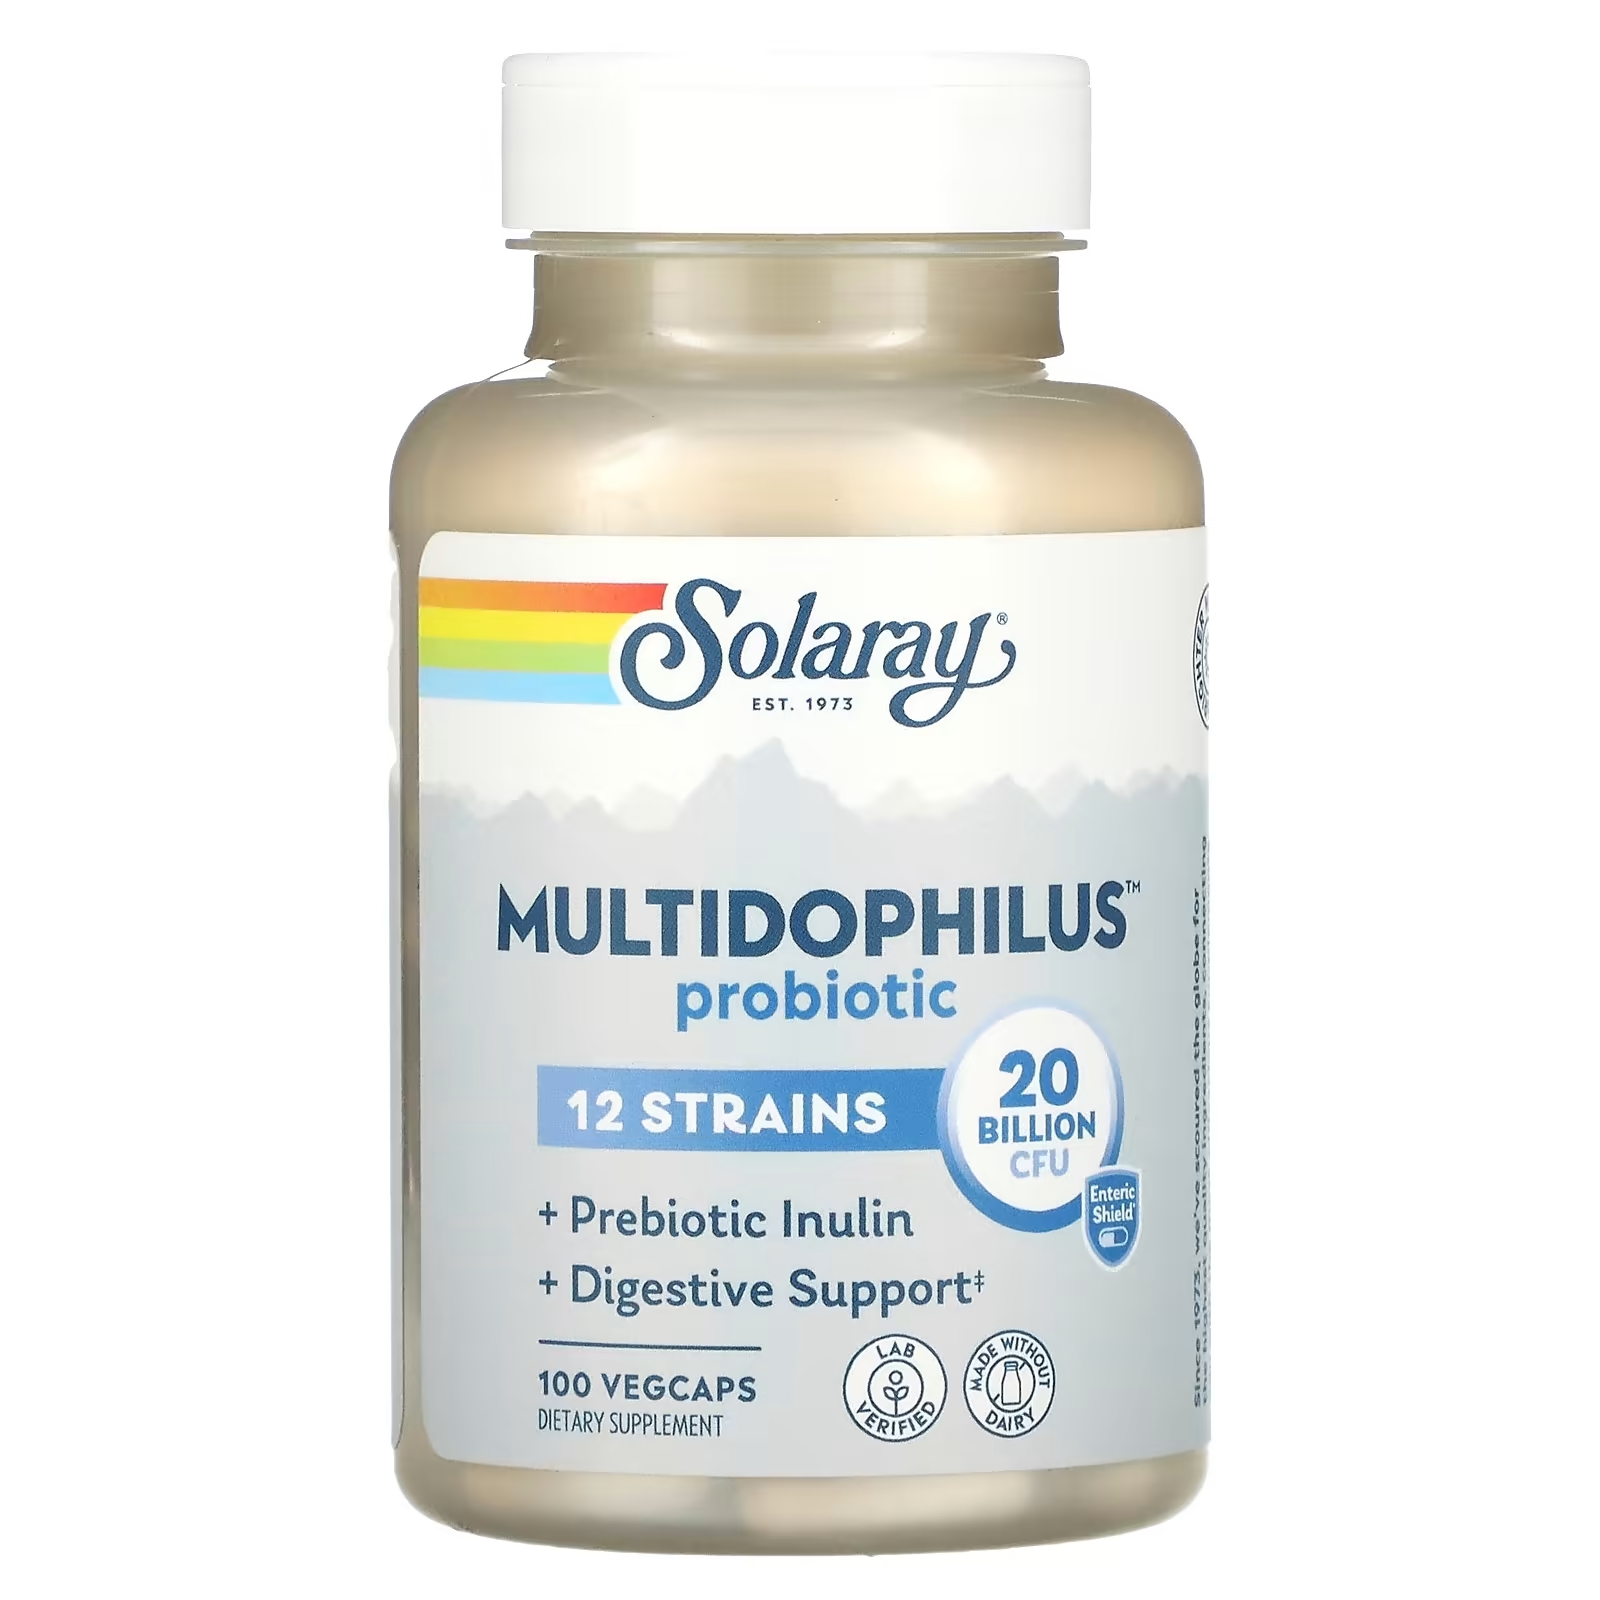 пробиотик solaray multidophilus 20 миллиардов кое 50 растительных капсул Solaray Multidophilus Probiotic пробиотик 20 млрд КОЕ, 100 вегетарианских капсул VegCaps